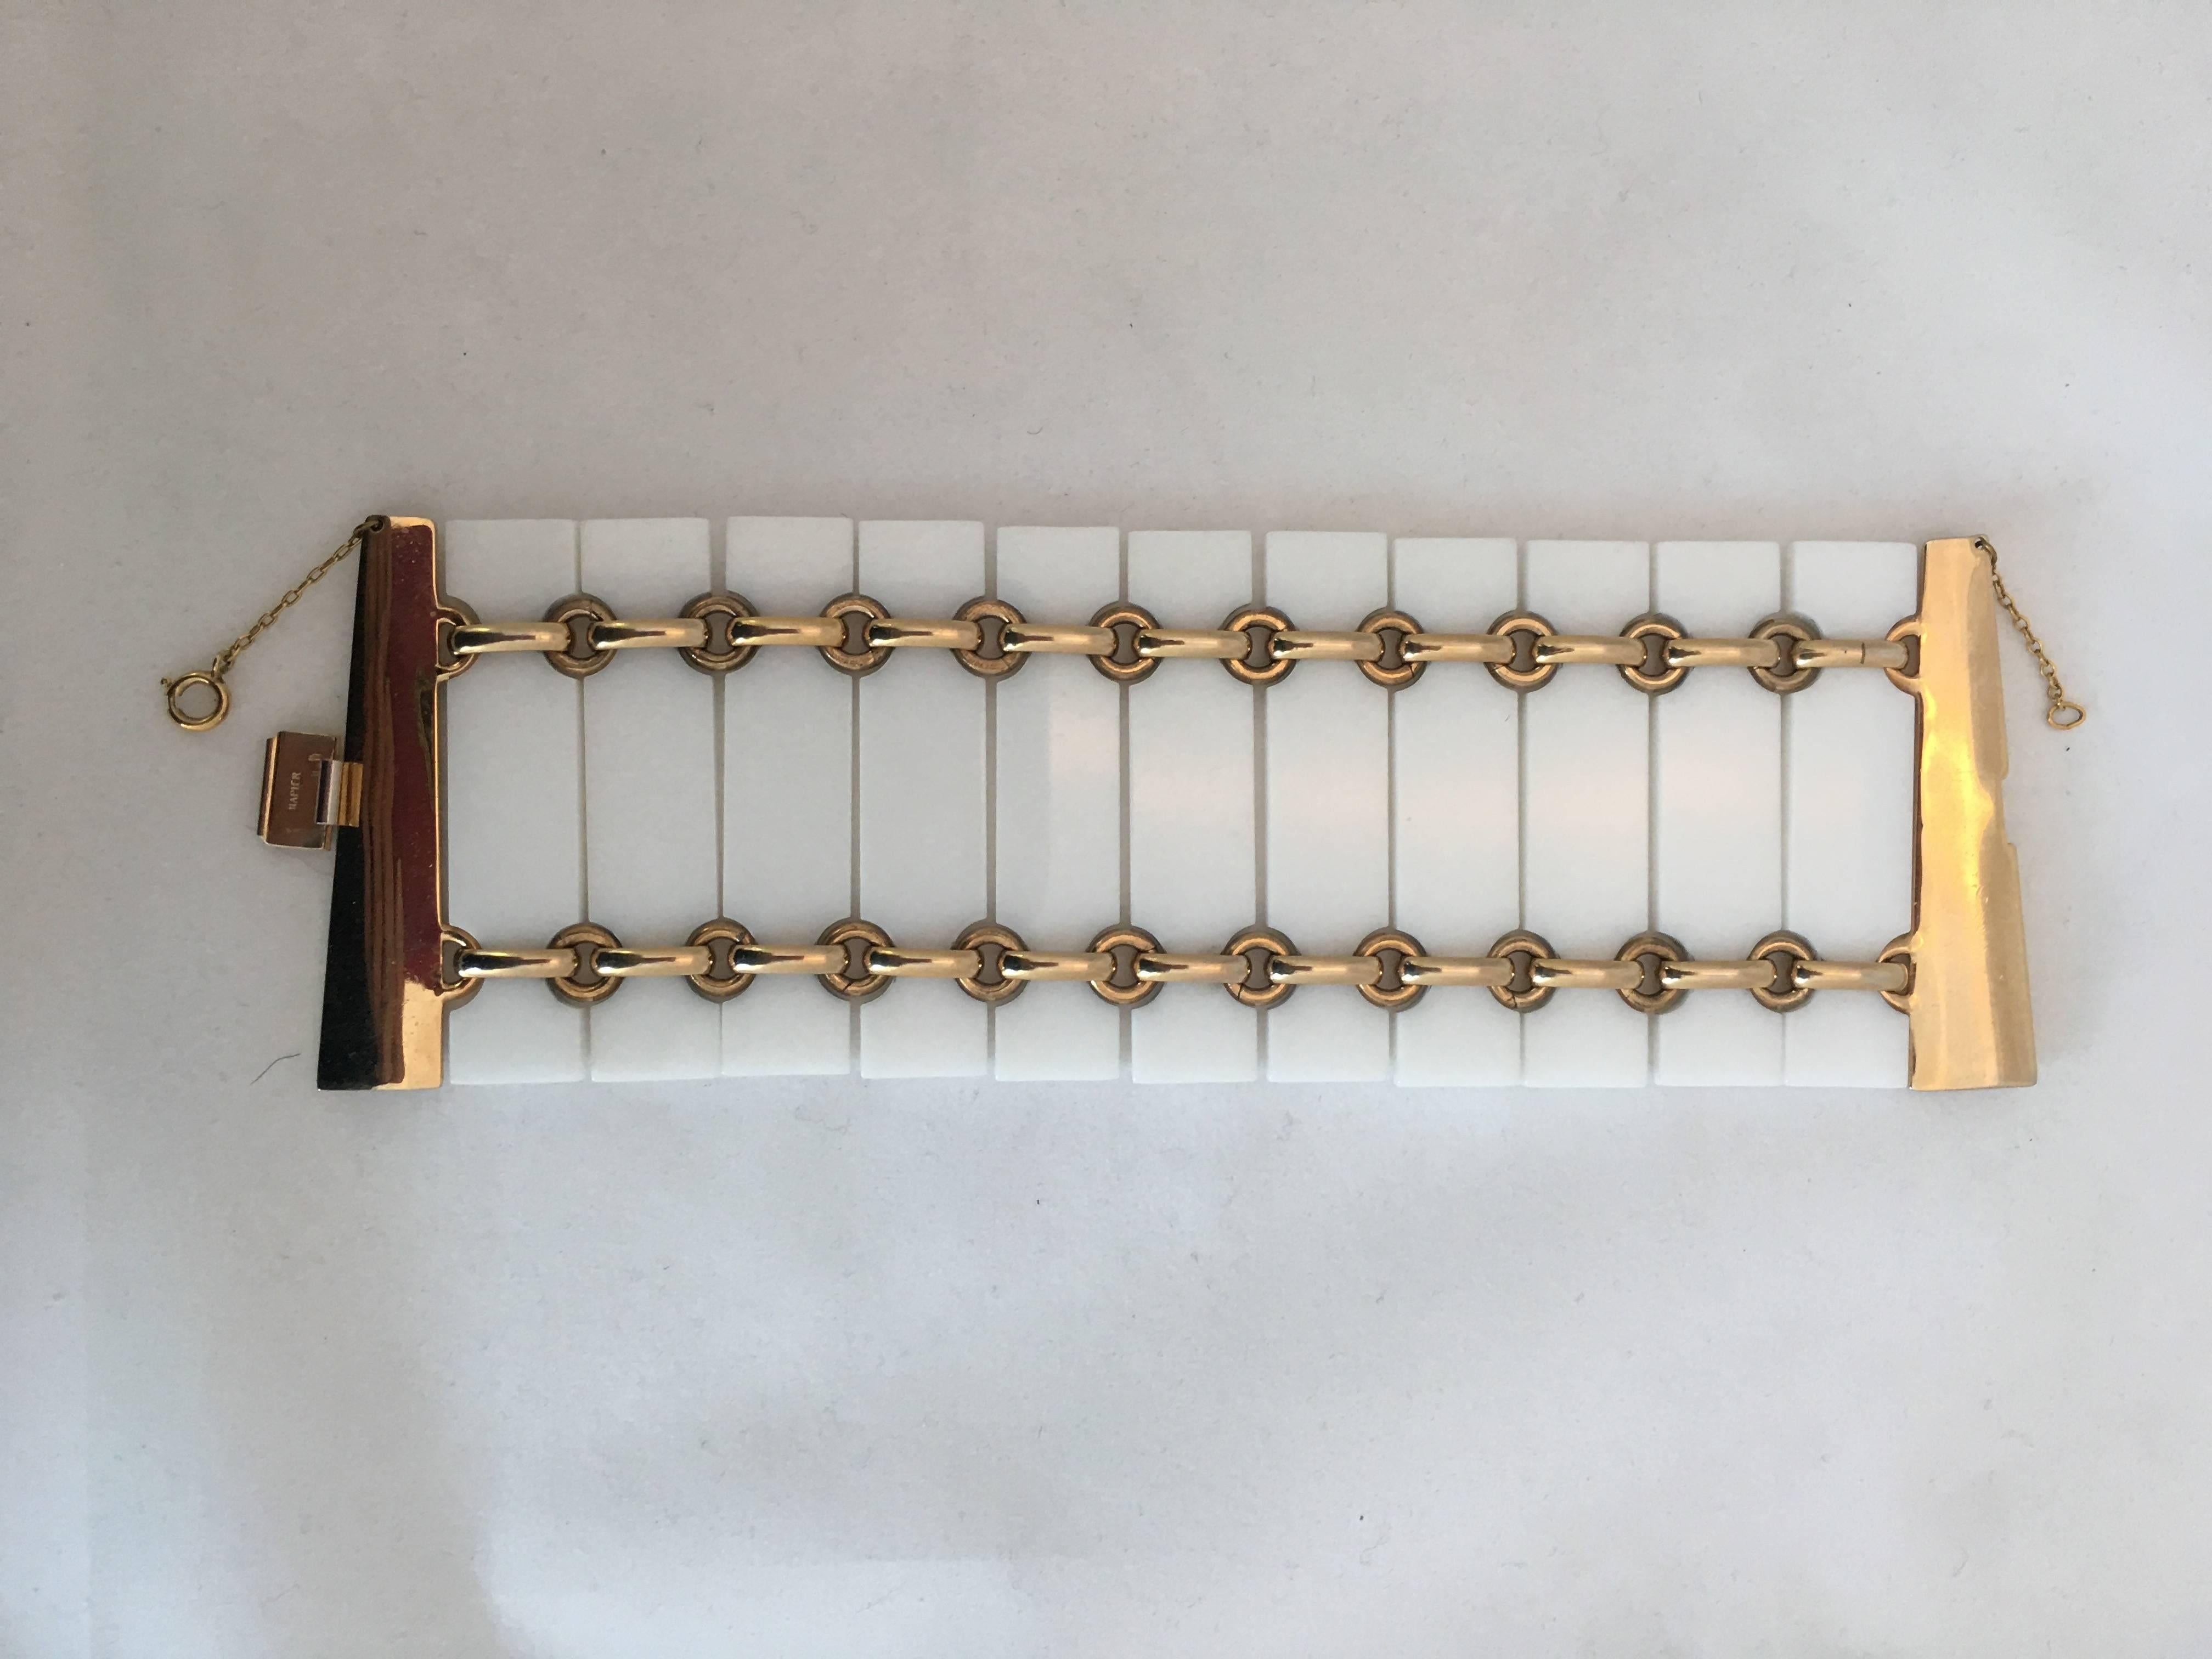  Napier 1980's Weißes Acryl & Gold-Ton Link-Armband

Länge: 7,75